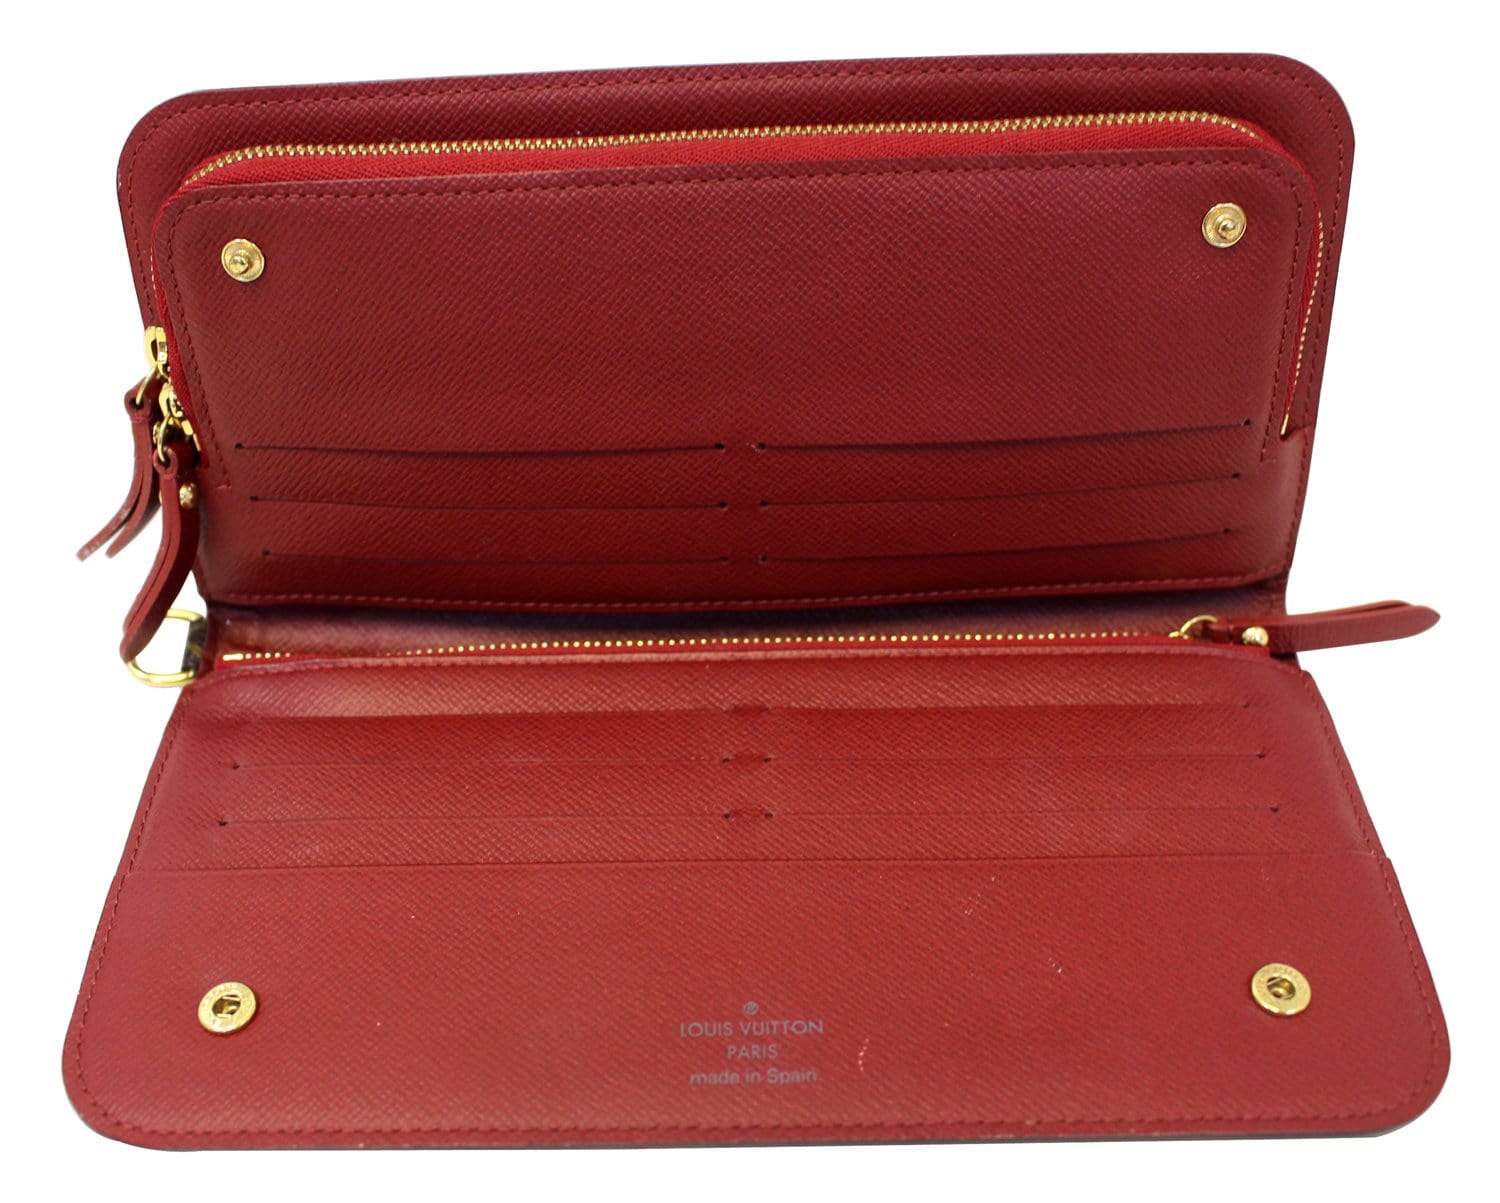 LOUIS VUITTON Monogram portefeuille DOUBLE V M64317 Wallet Red